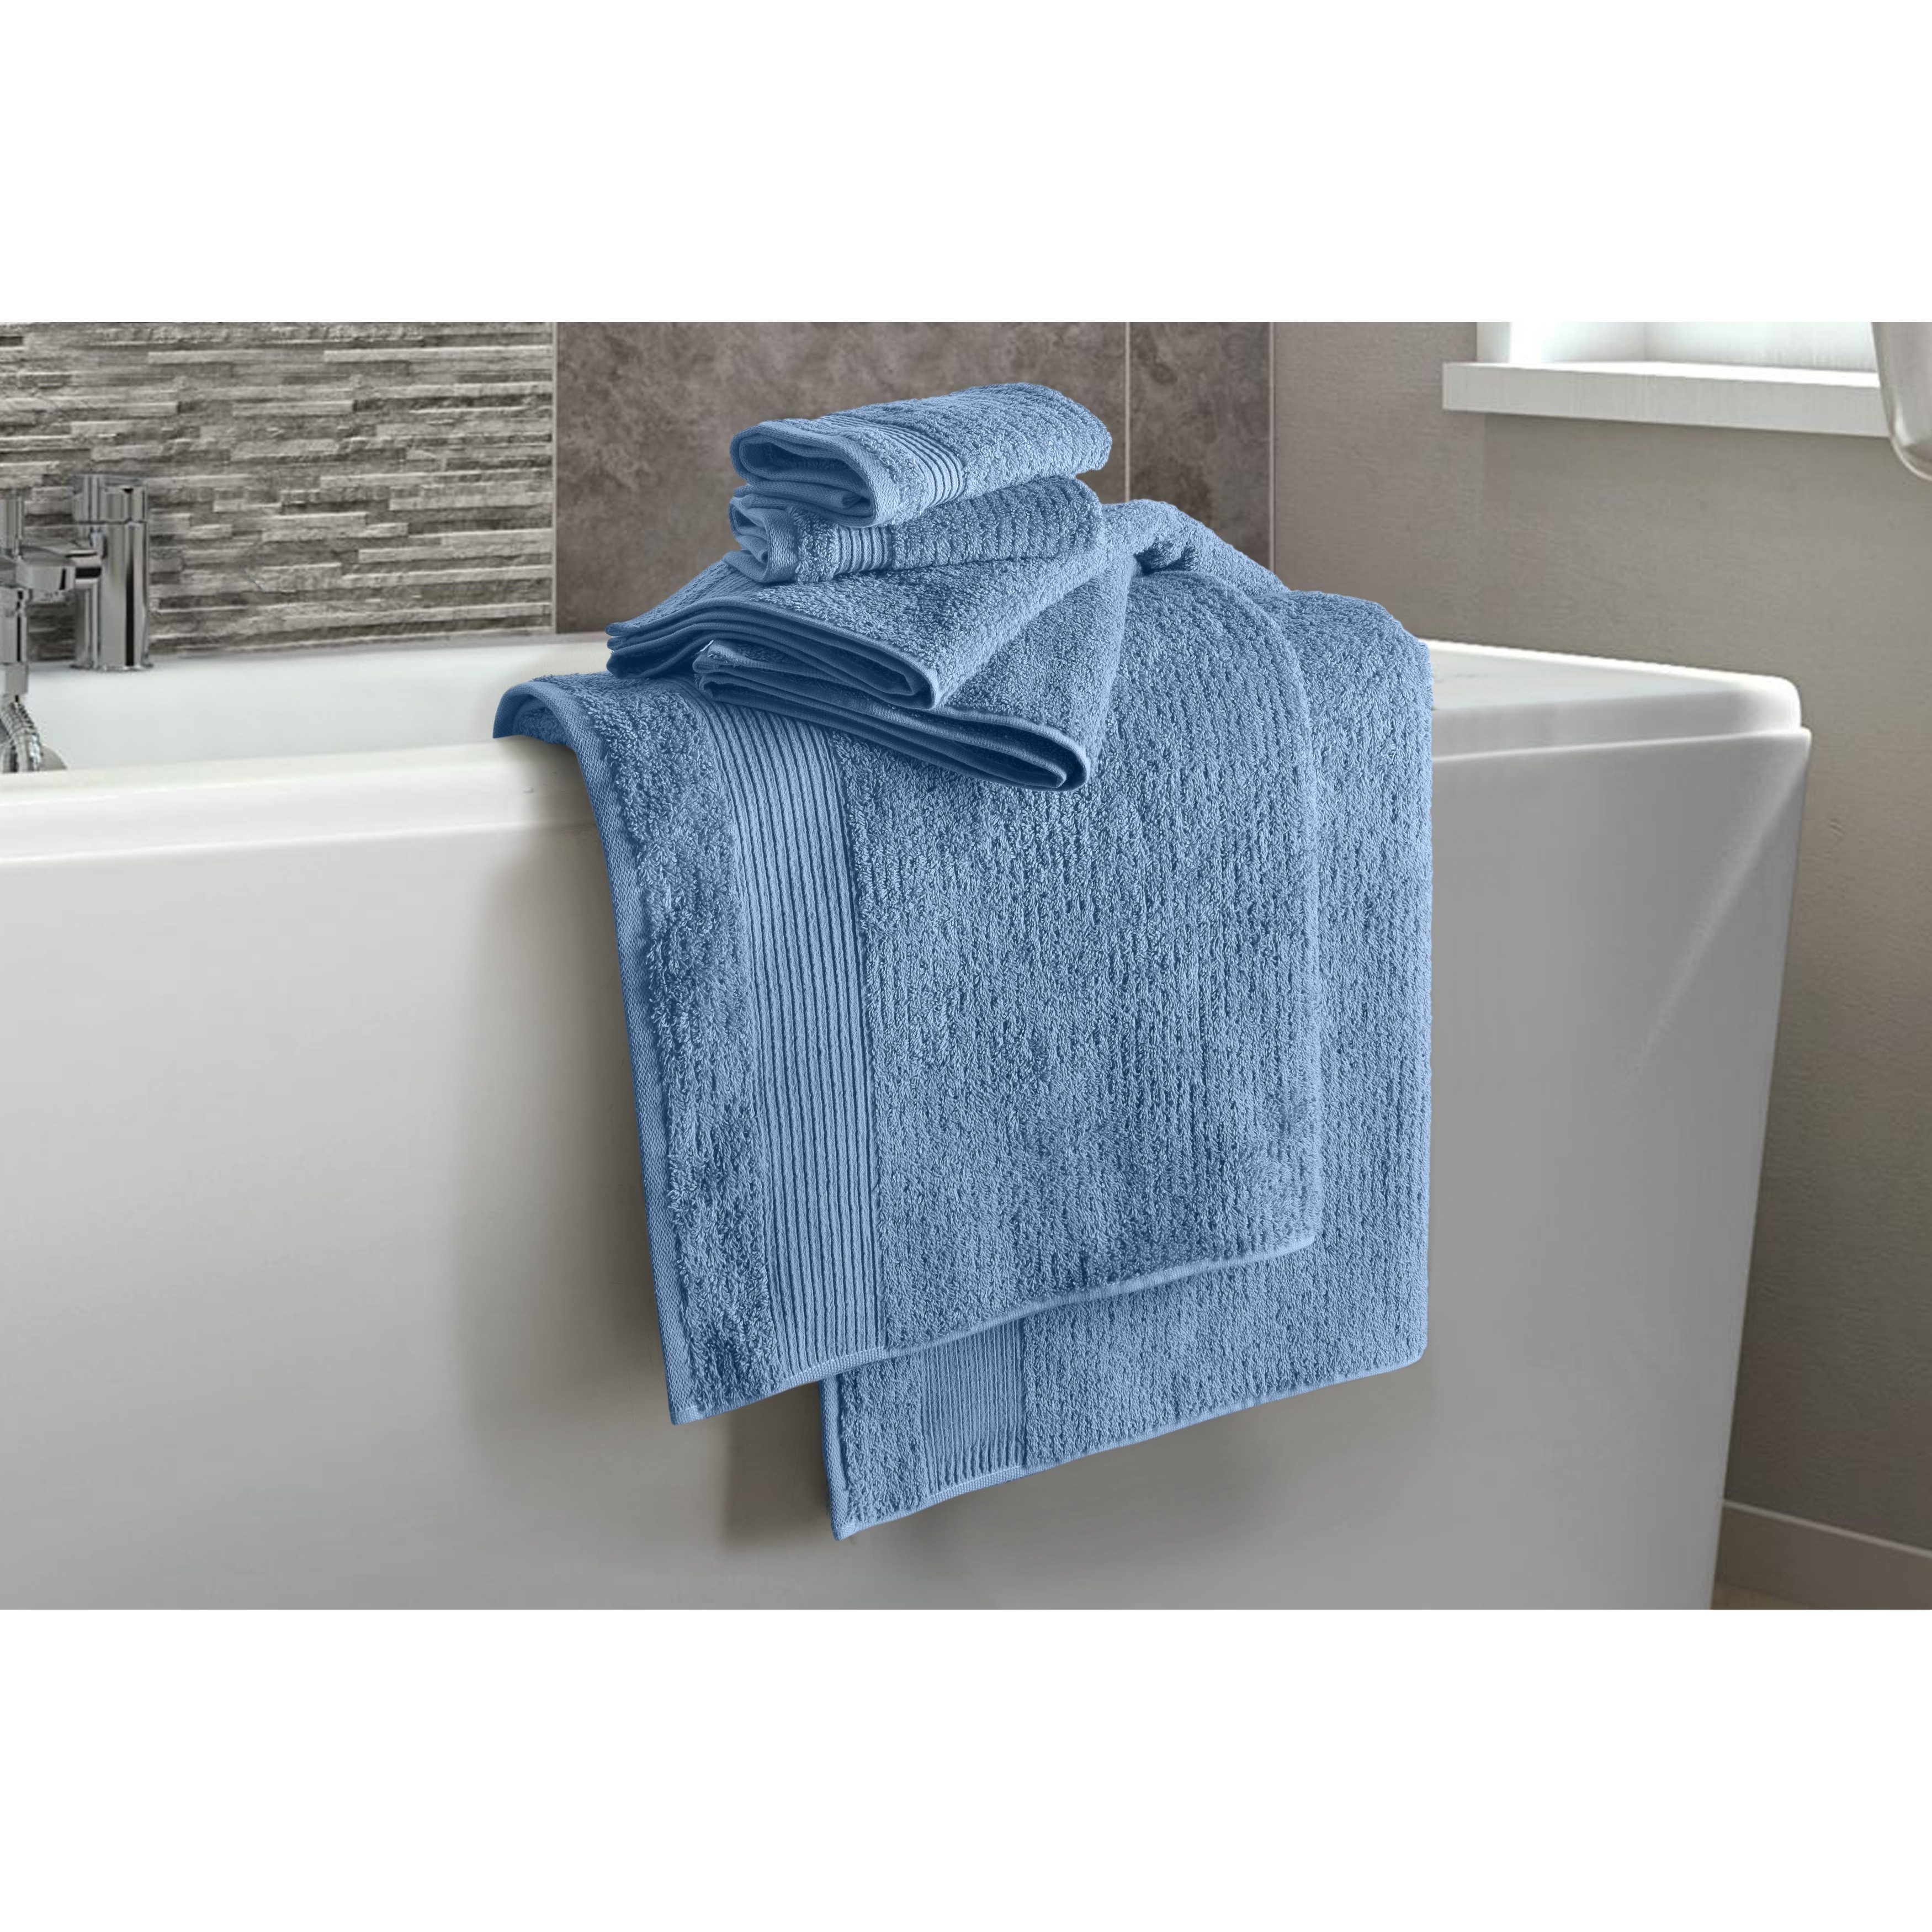 https://ak1.ostkcdn.com/images/products/is/images/direct/3b17fe6a8ab85c48e6d7480a47206b5be3c036b7/Chic-Home-6-Piece-Standard-100-Oeko-Tex-Certified-Towel-Set.jpg